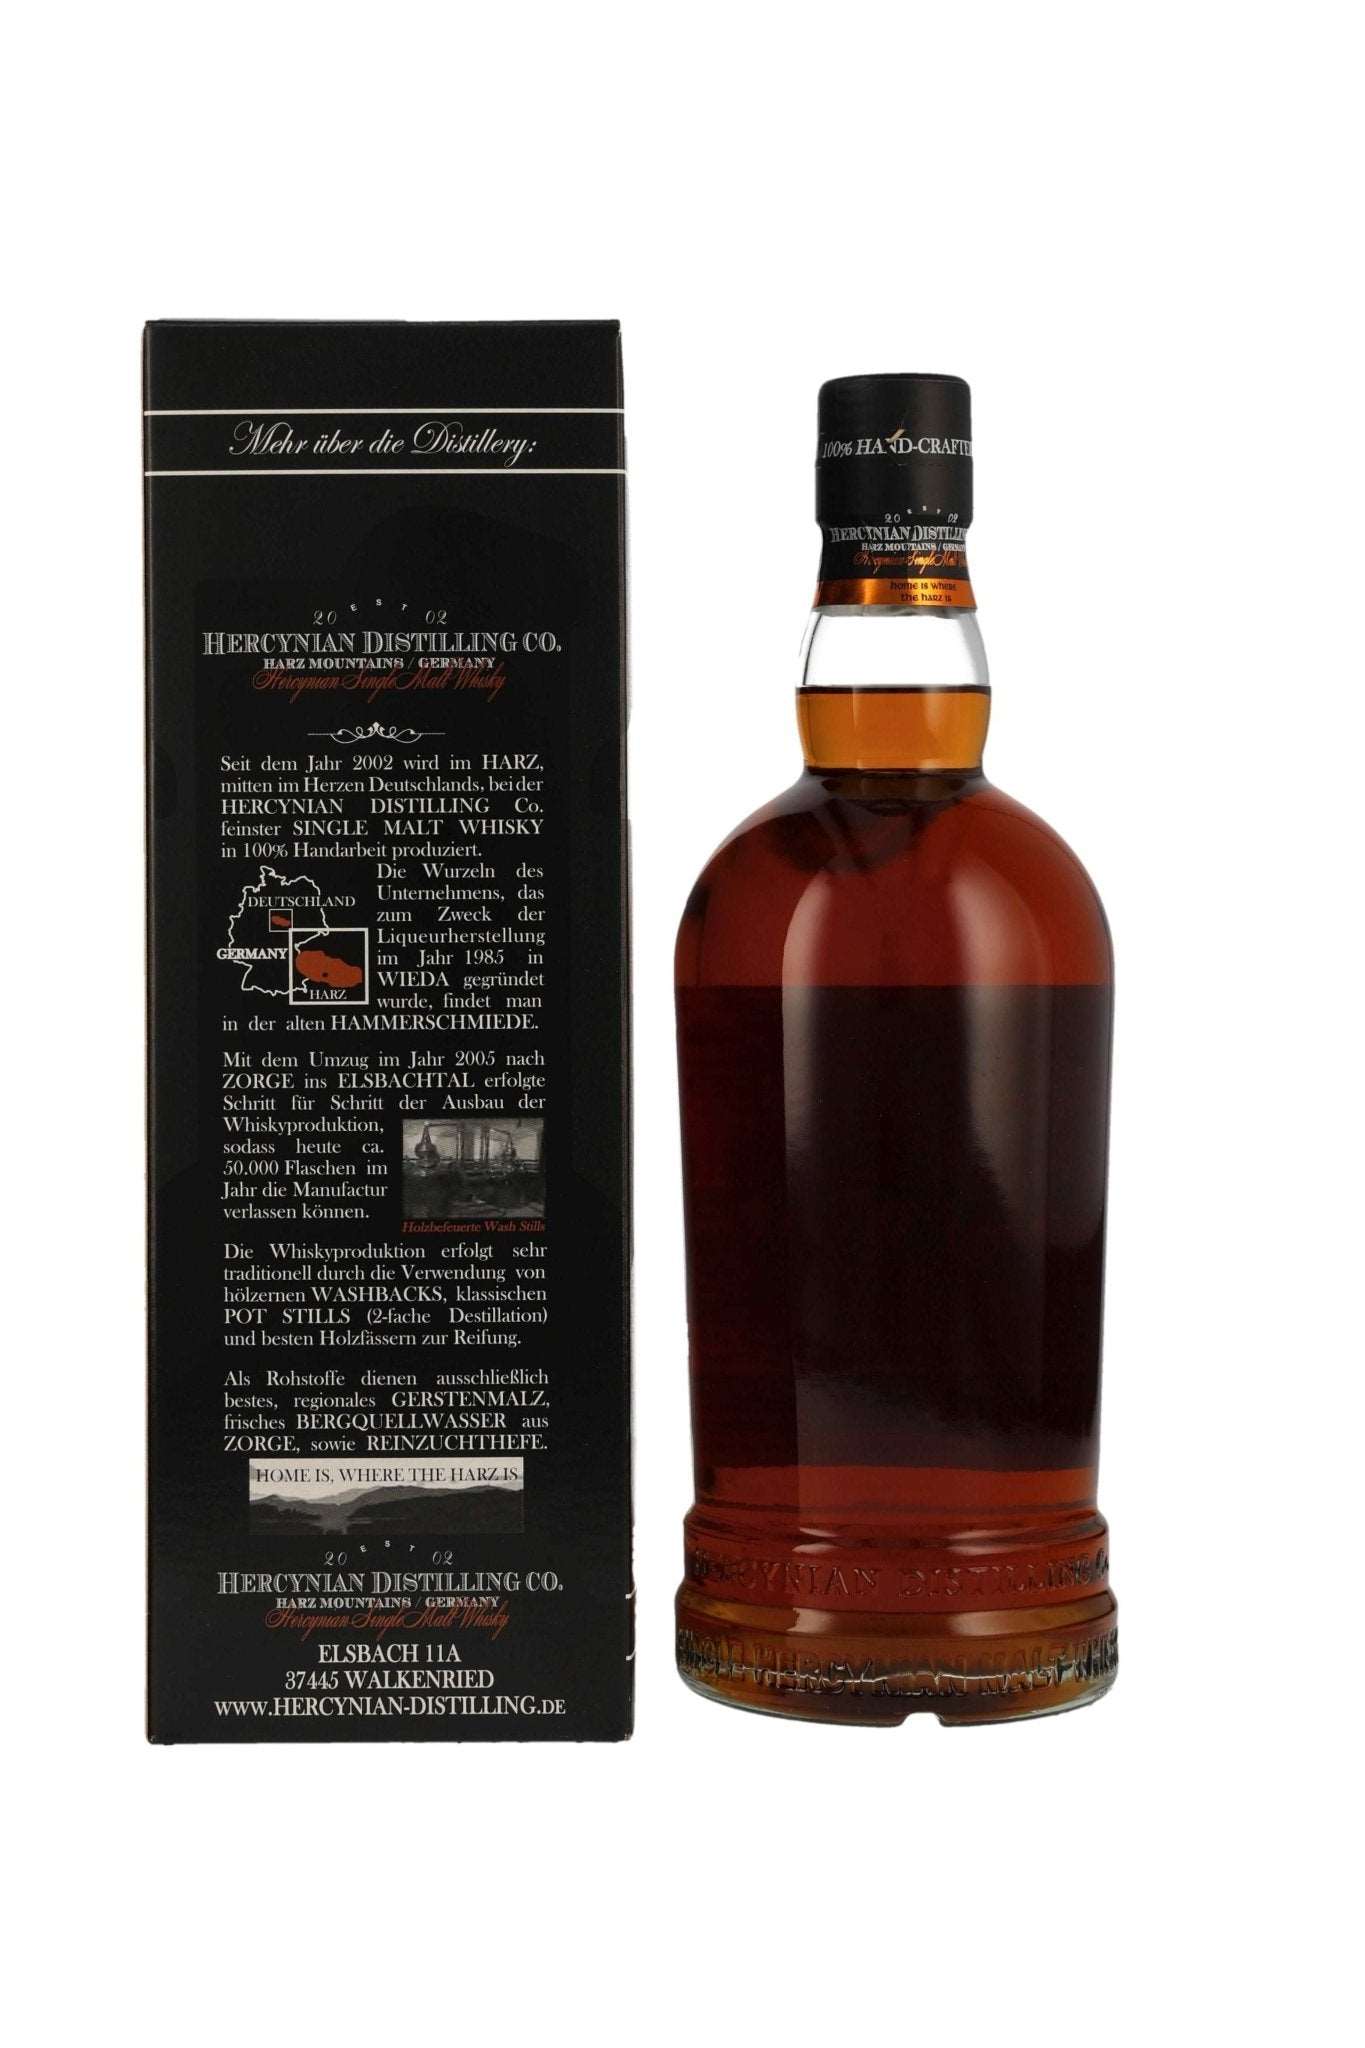 Elsburn Cosy Winter IX 2023 Hercynian Single Malt Whisky 9. Edition 53,2% vol. 700ml - Maltimore